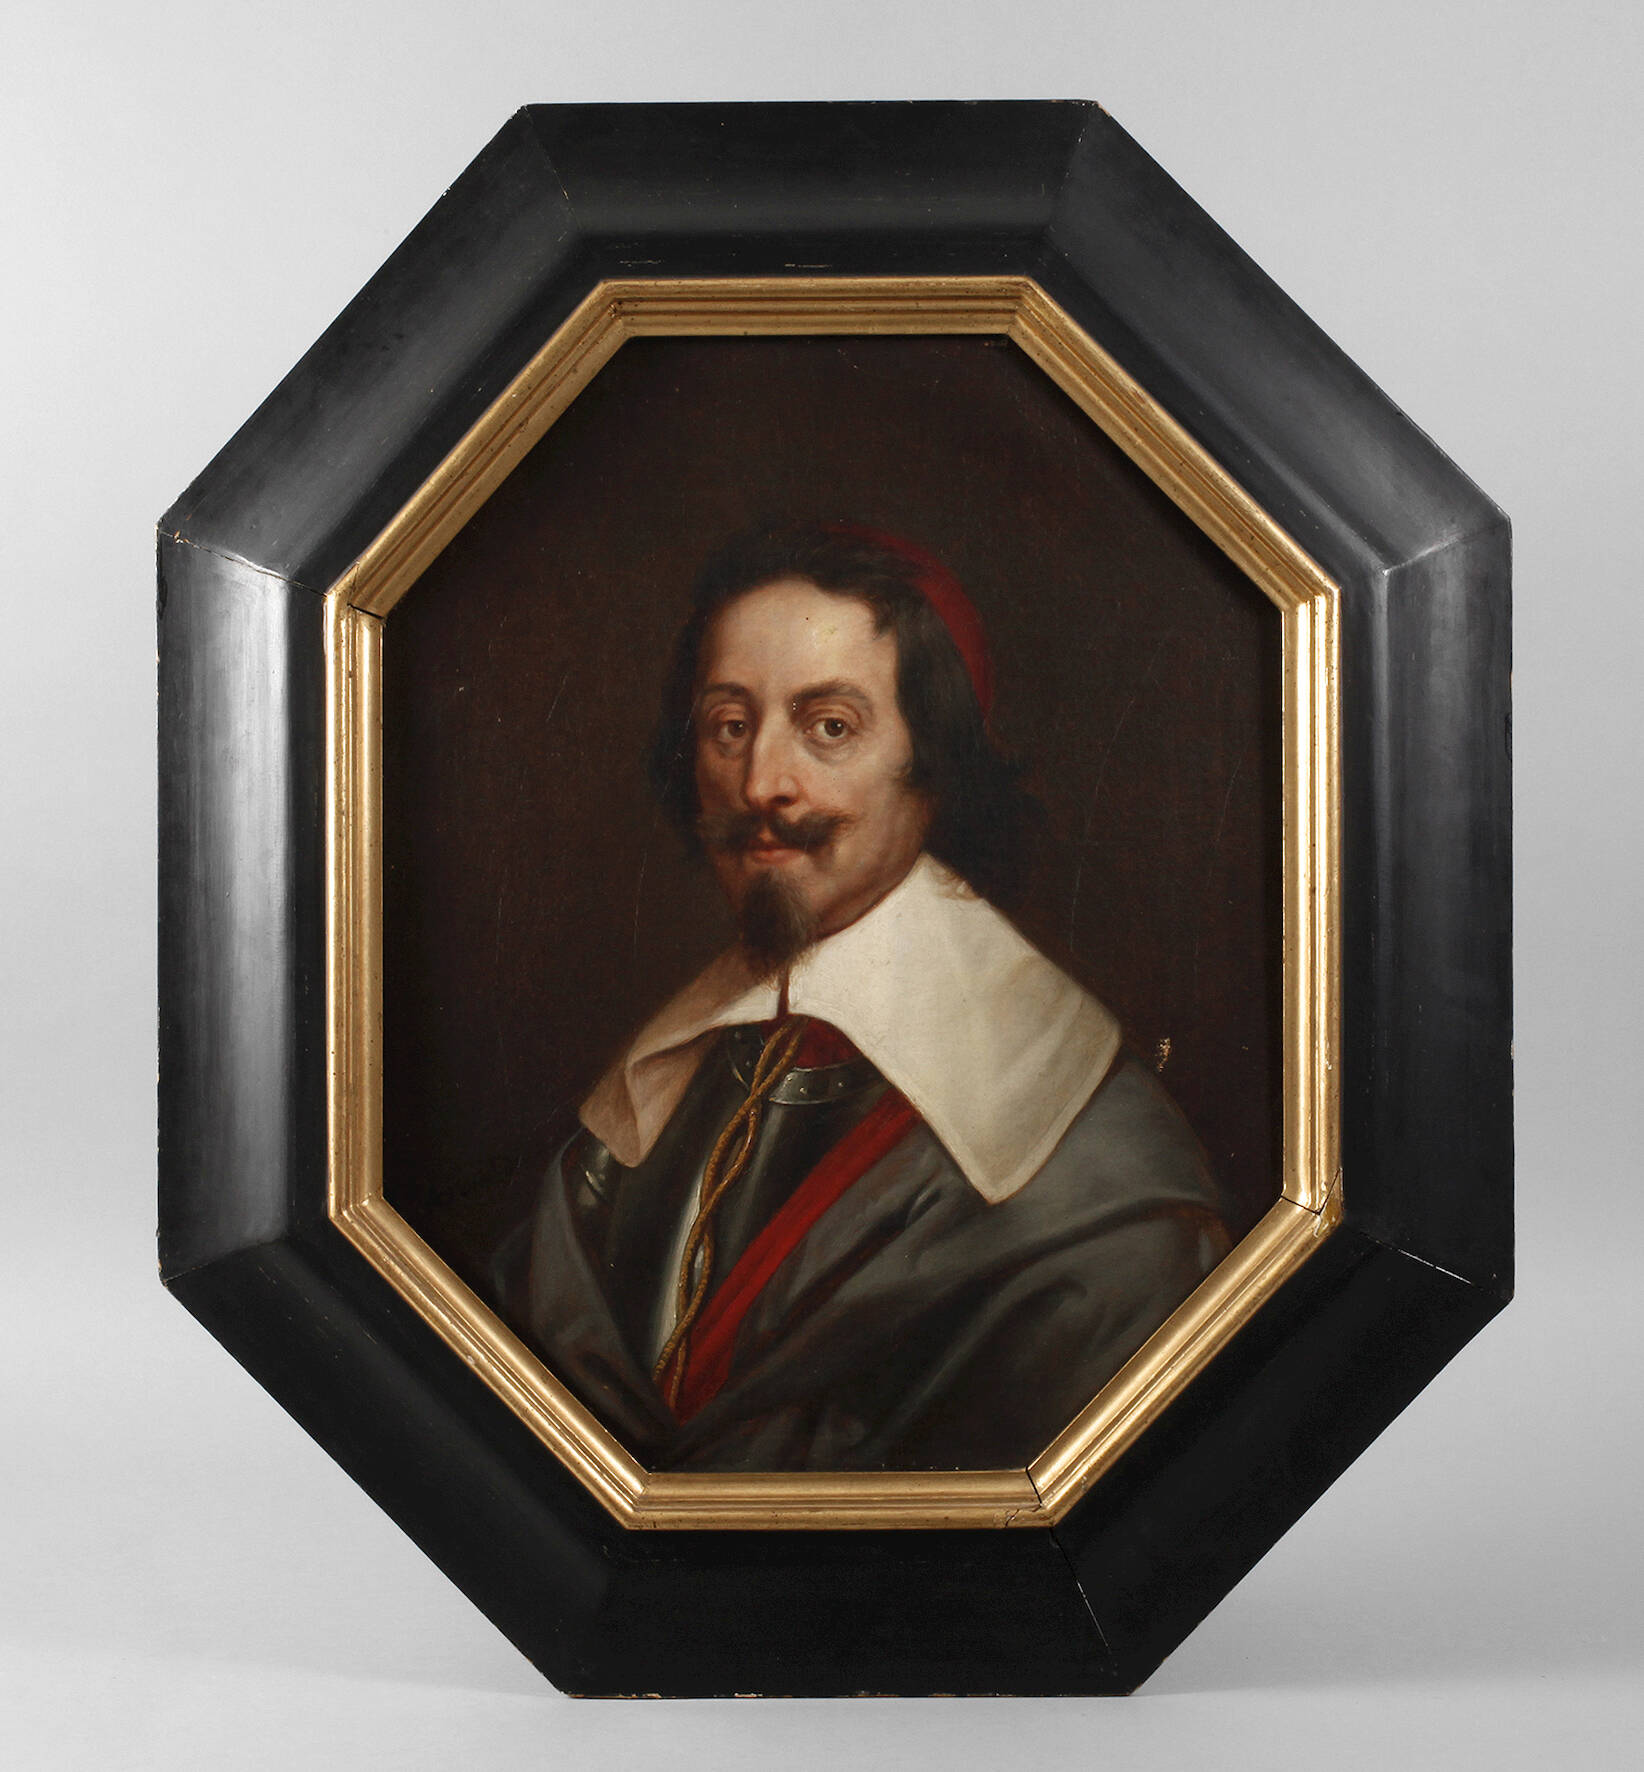 Artemij Grusdin, Portrait des Kardinals Richelieu